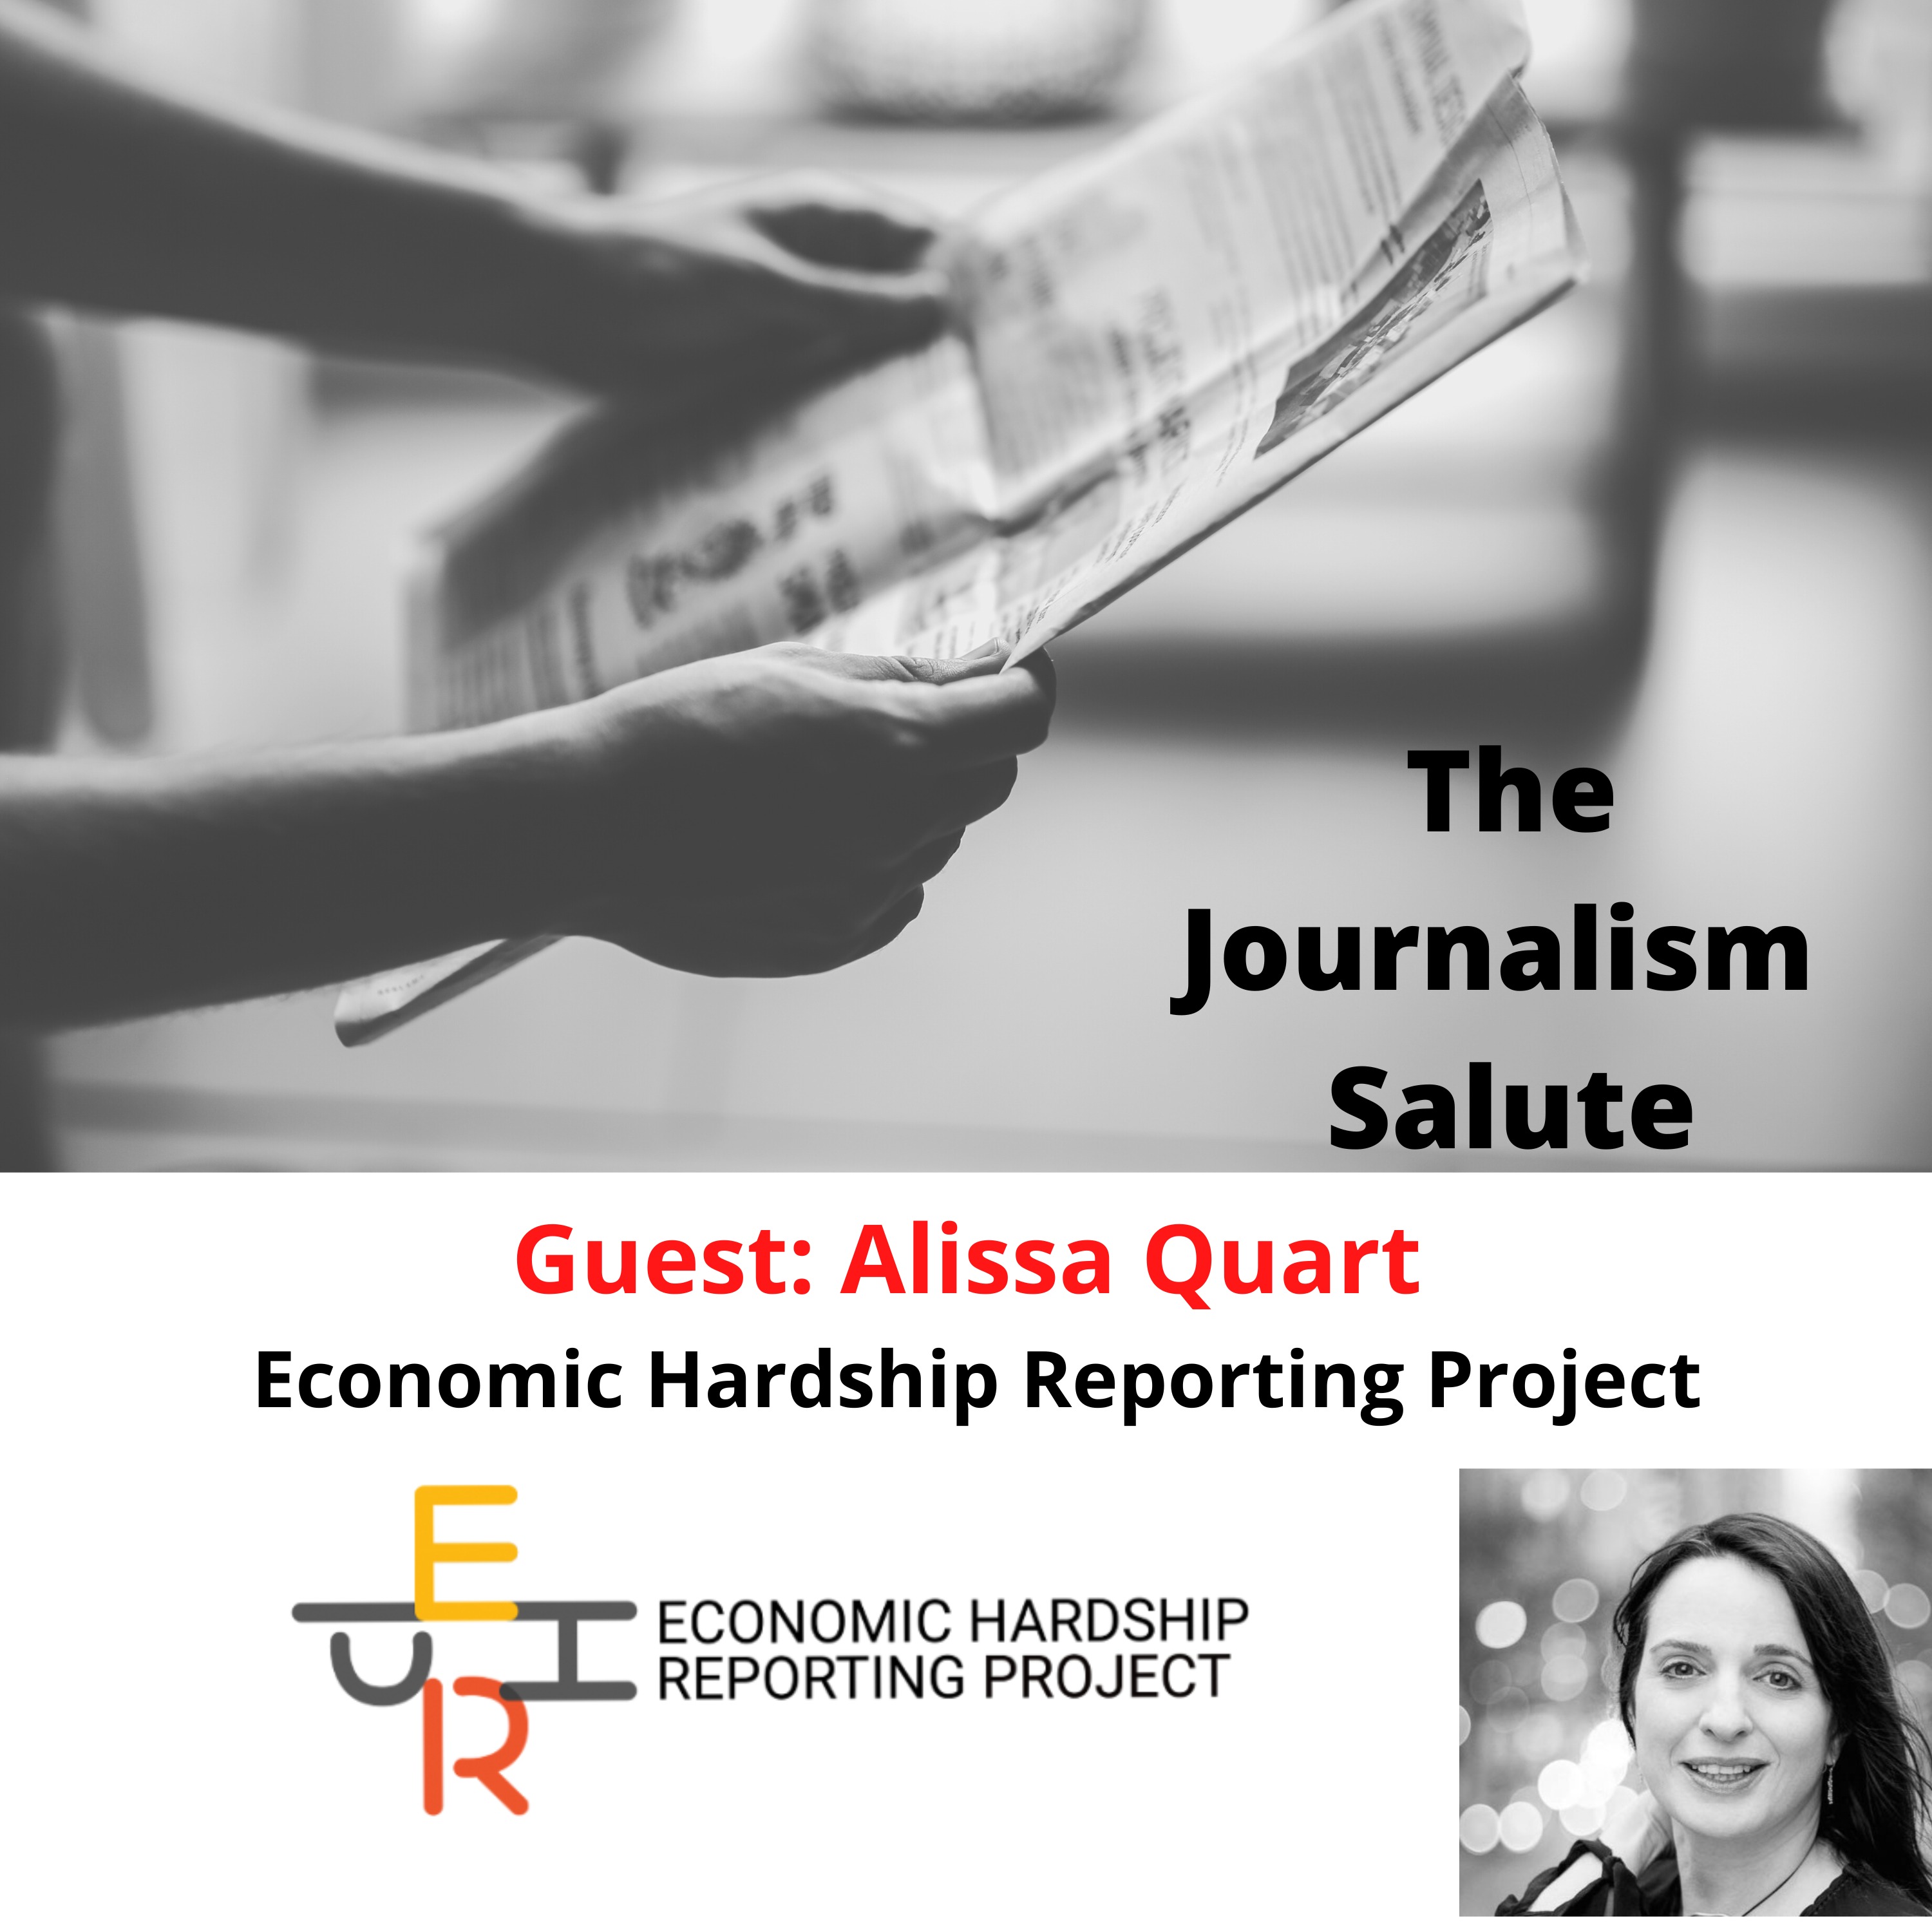 Alissa Quart, Economic Hardship Reporting Project